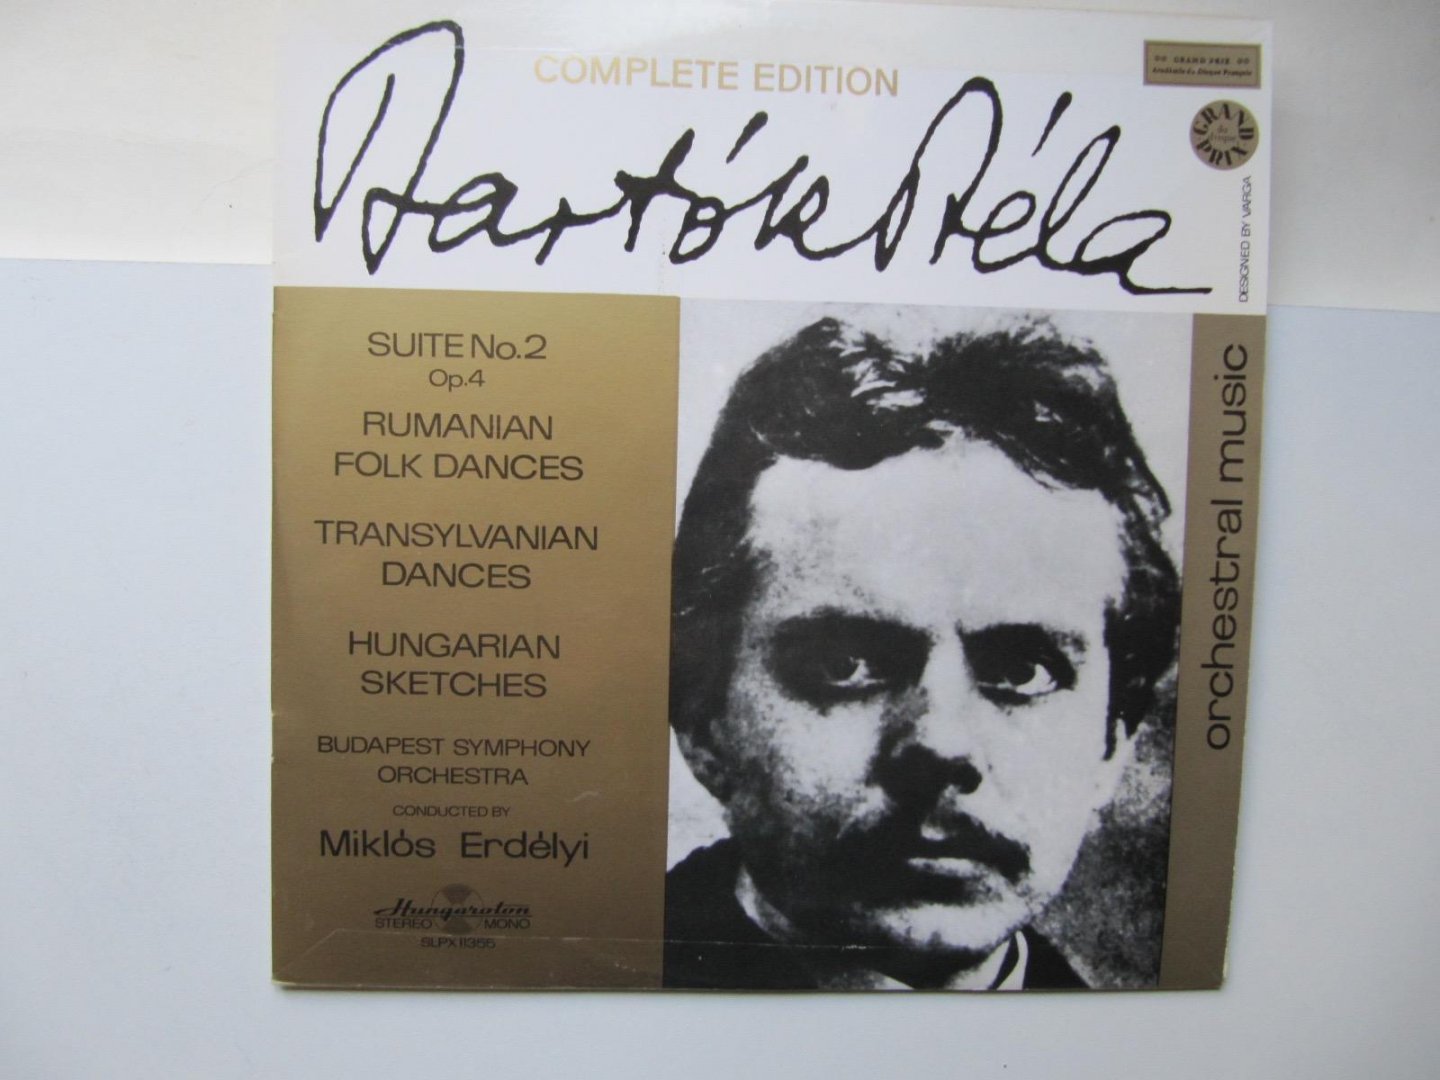 Bartok Bela and Budapest Symphony Orchestra - Complete Edition Bartok Bela